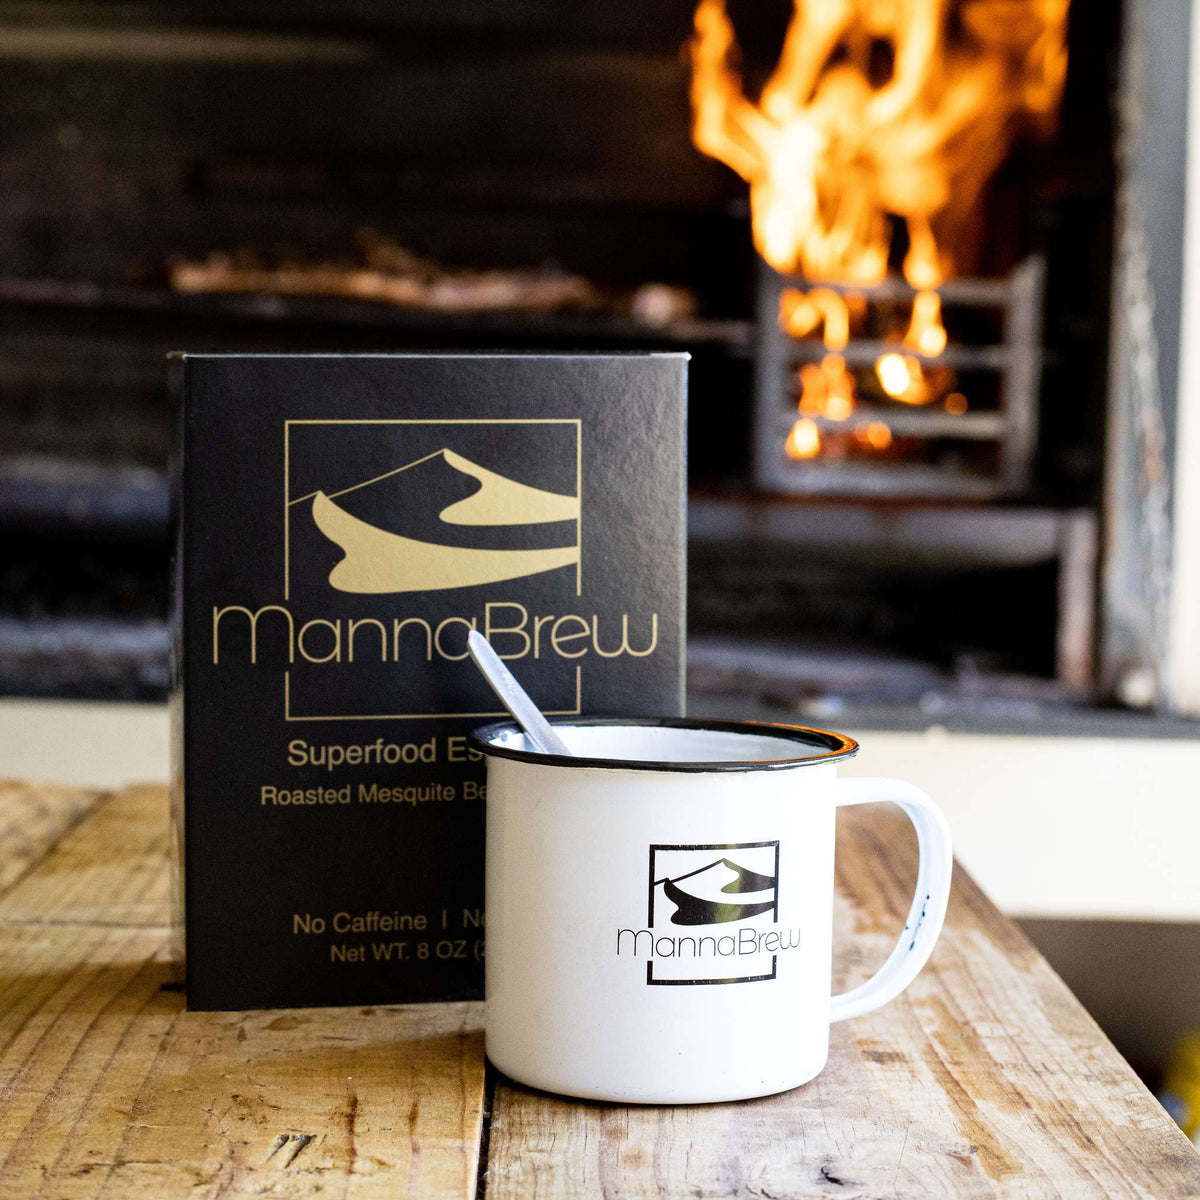 MannaBrew - the perfect coffee alternative